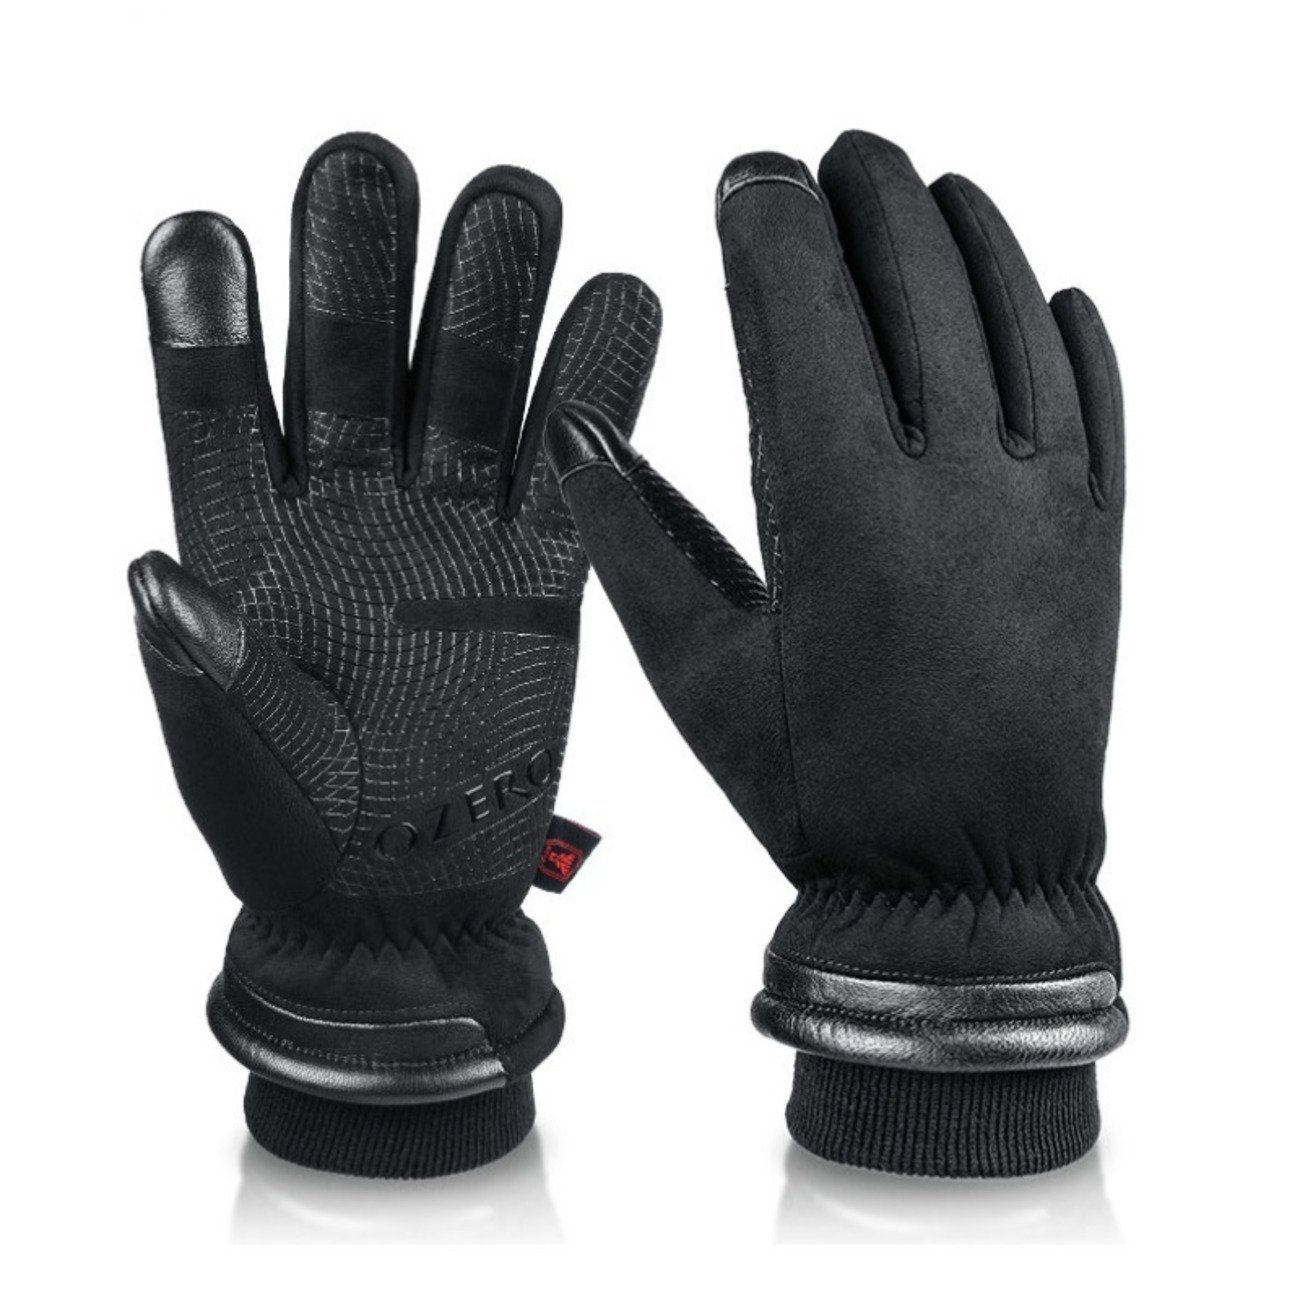 Reisen Union Sport-Rad-Touchscreen-Handschuhe Winterwarme Reithandschuhe